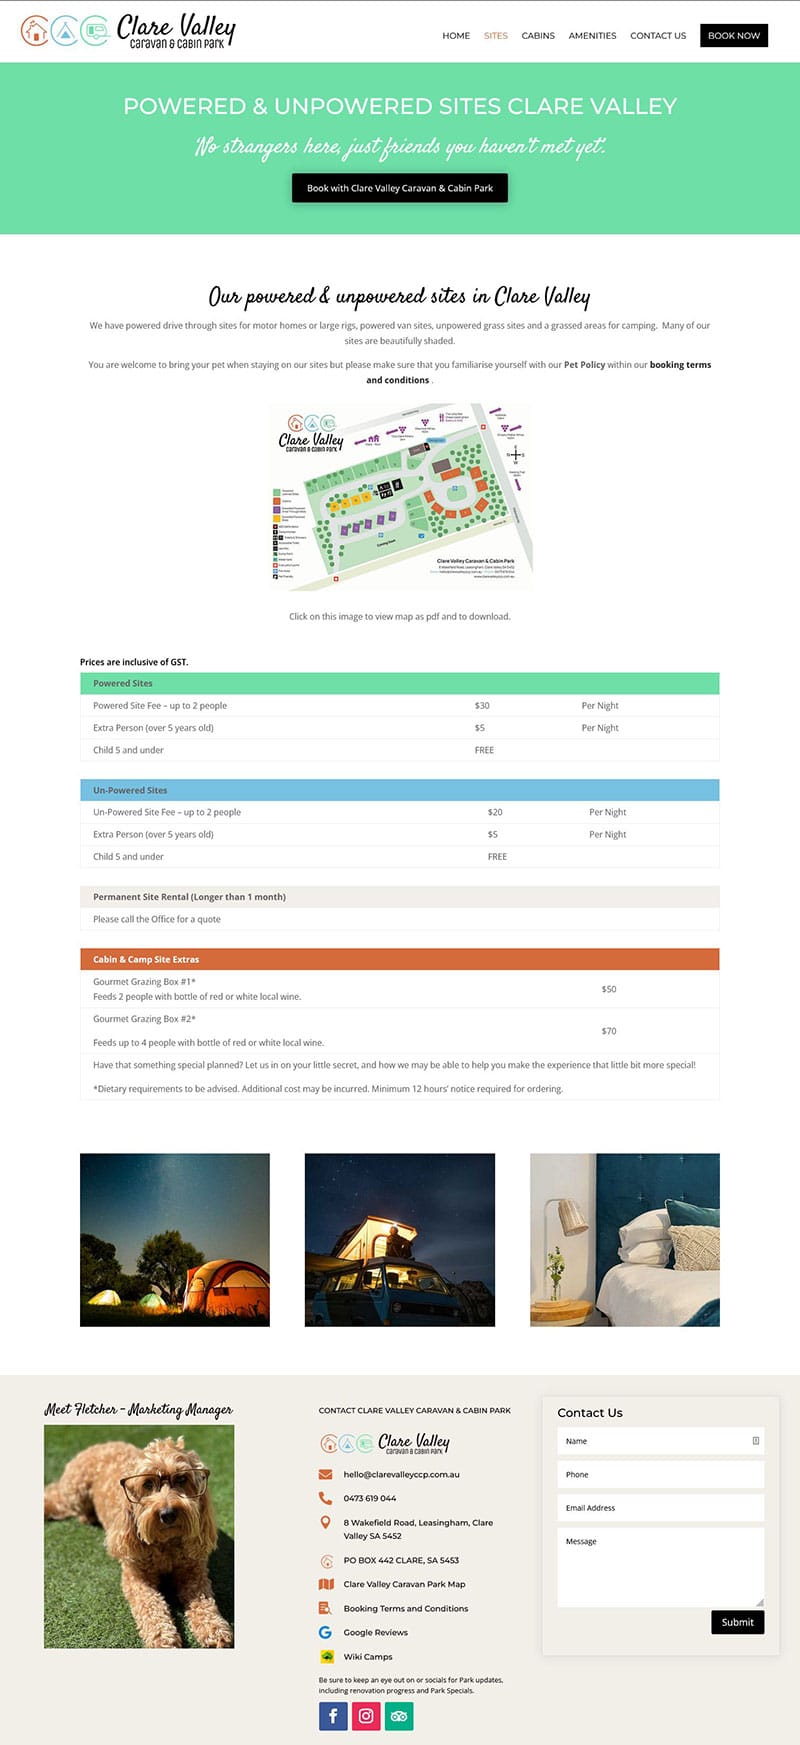 website design for clare valley caravan park 